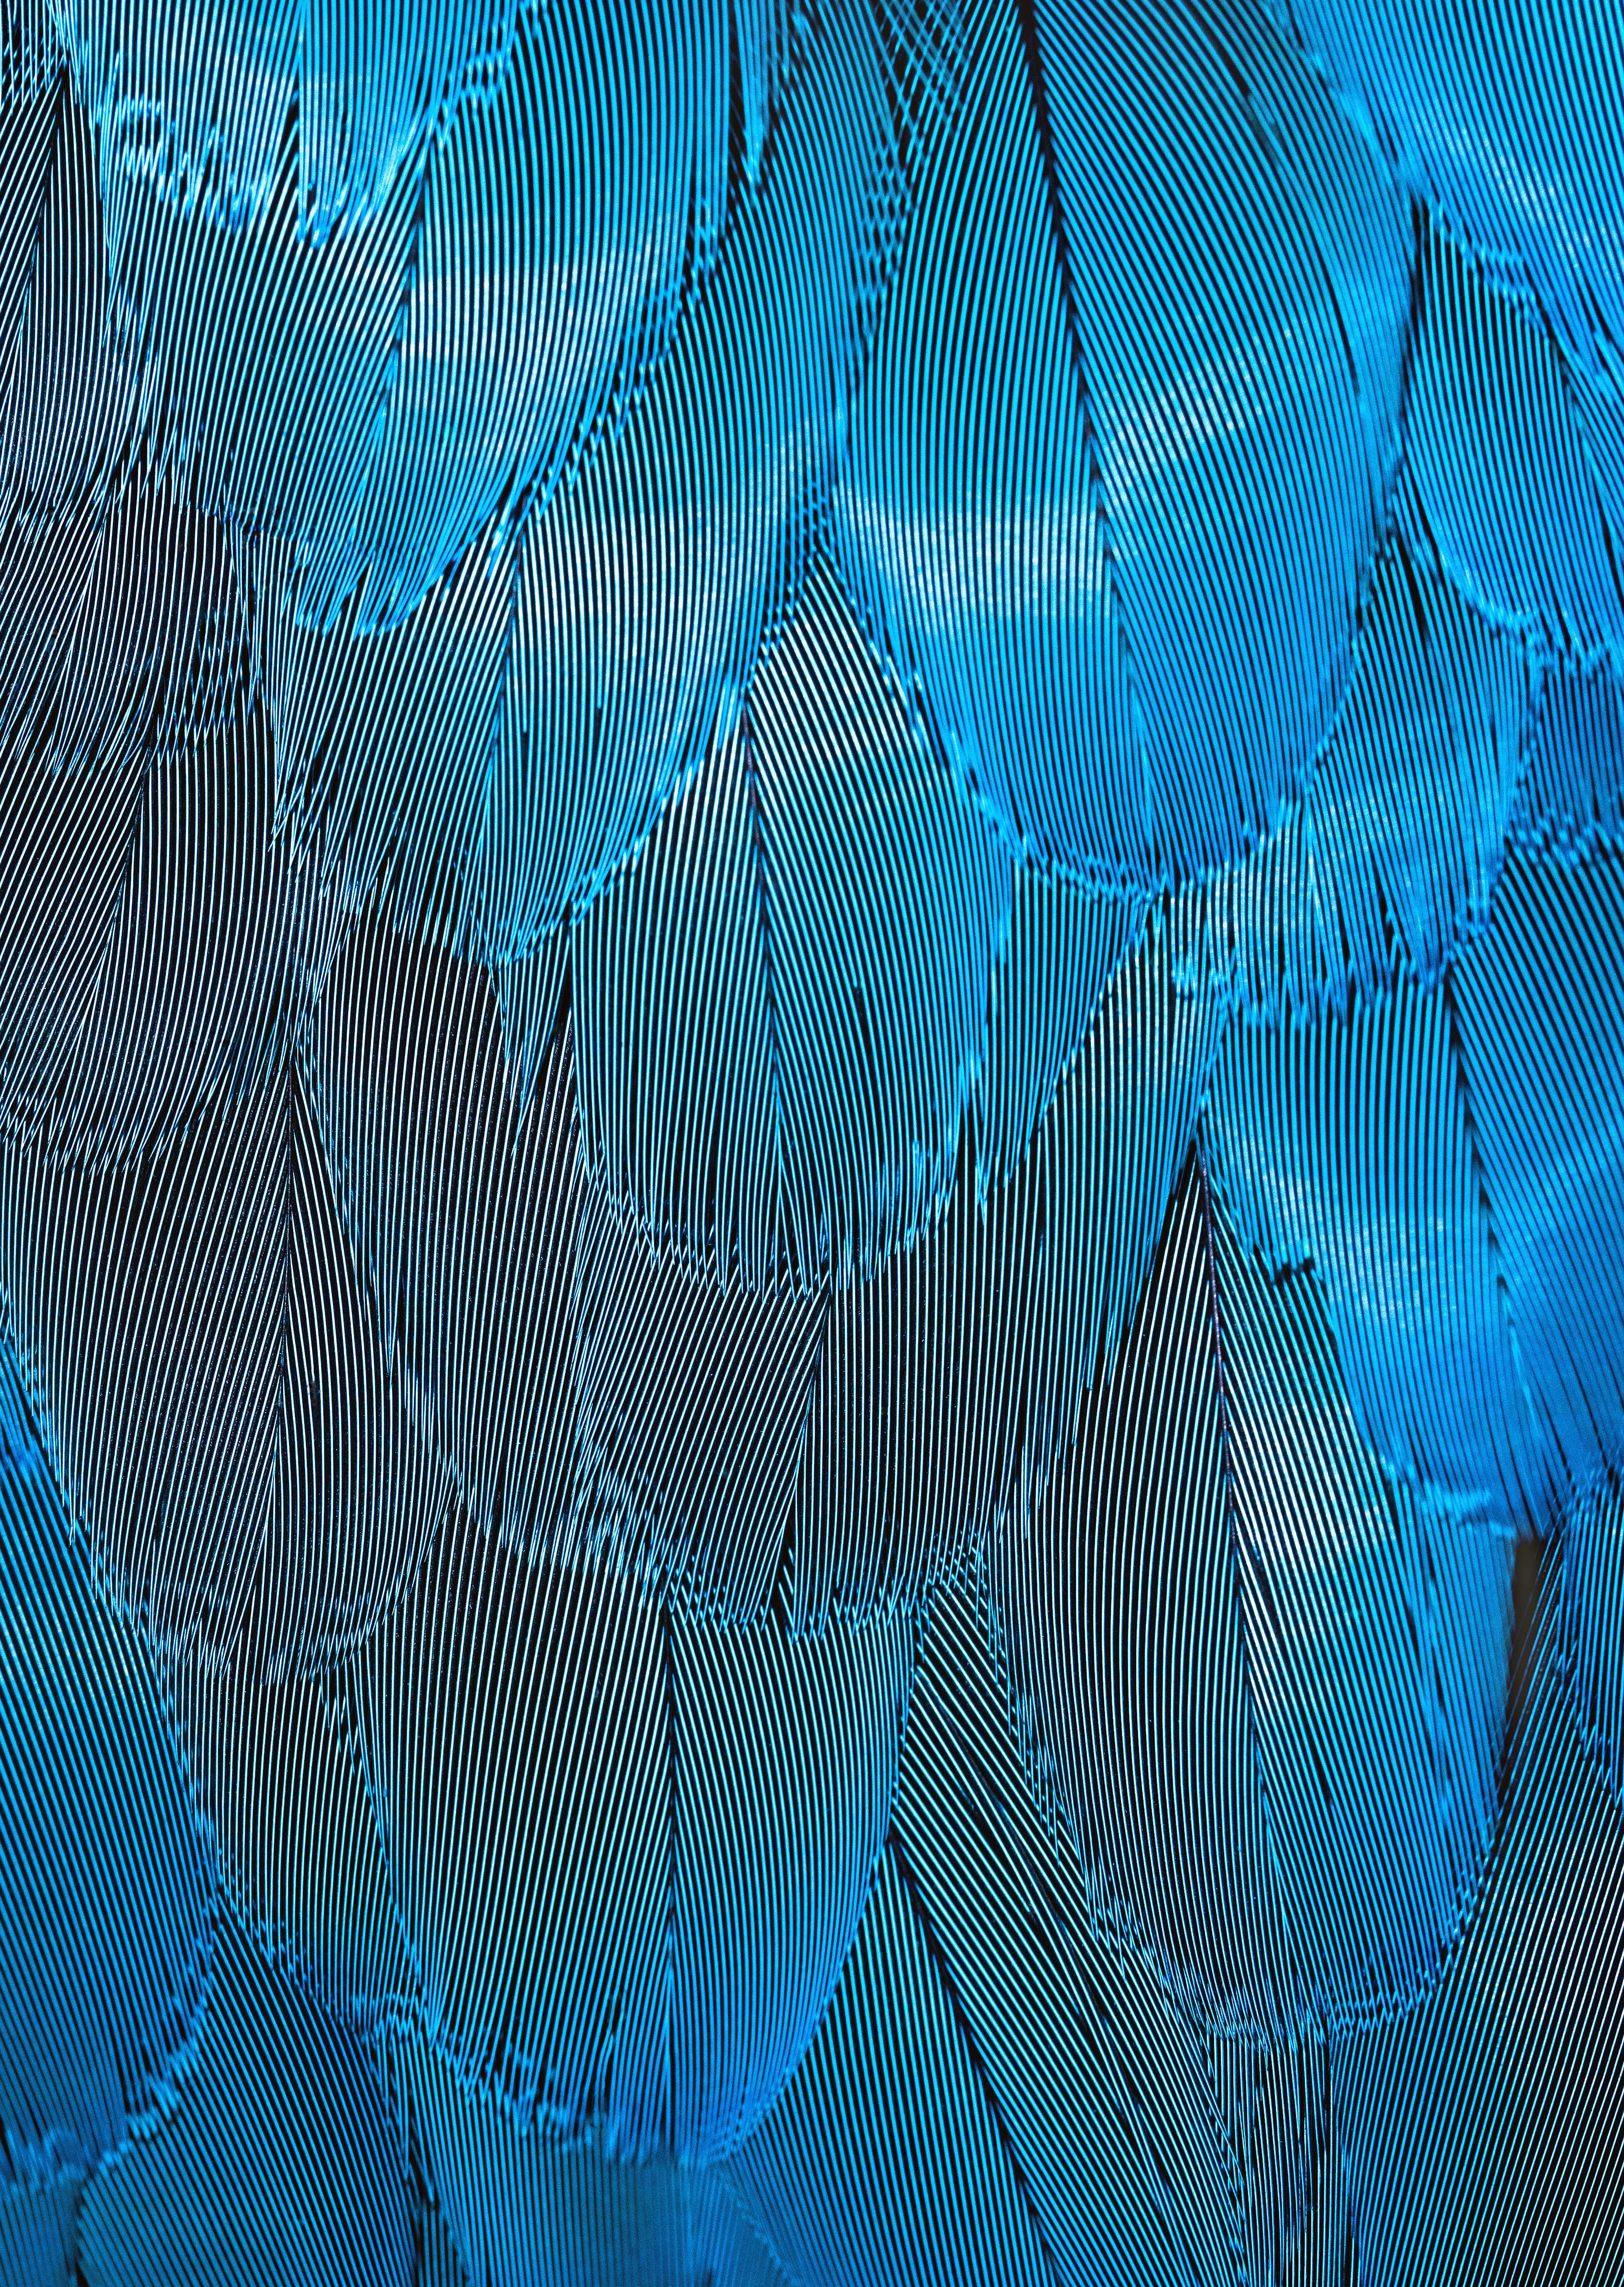 macro, feather, textures, blue, texture, iridescent Full HD